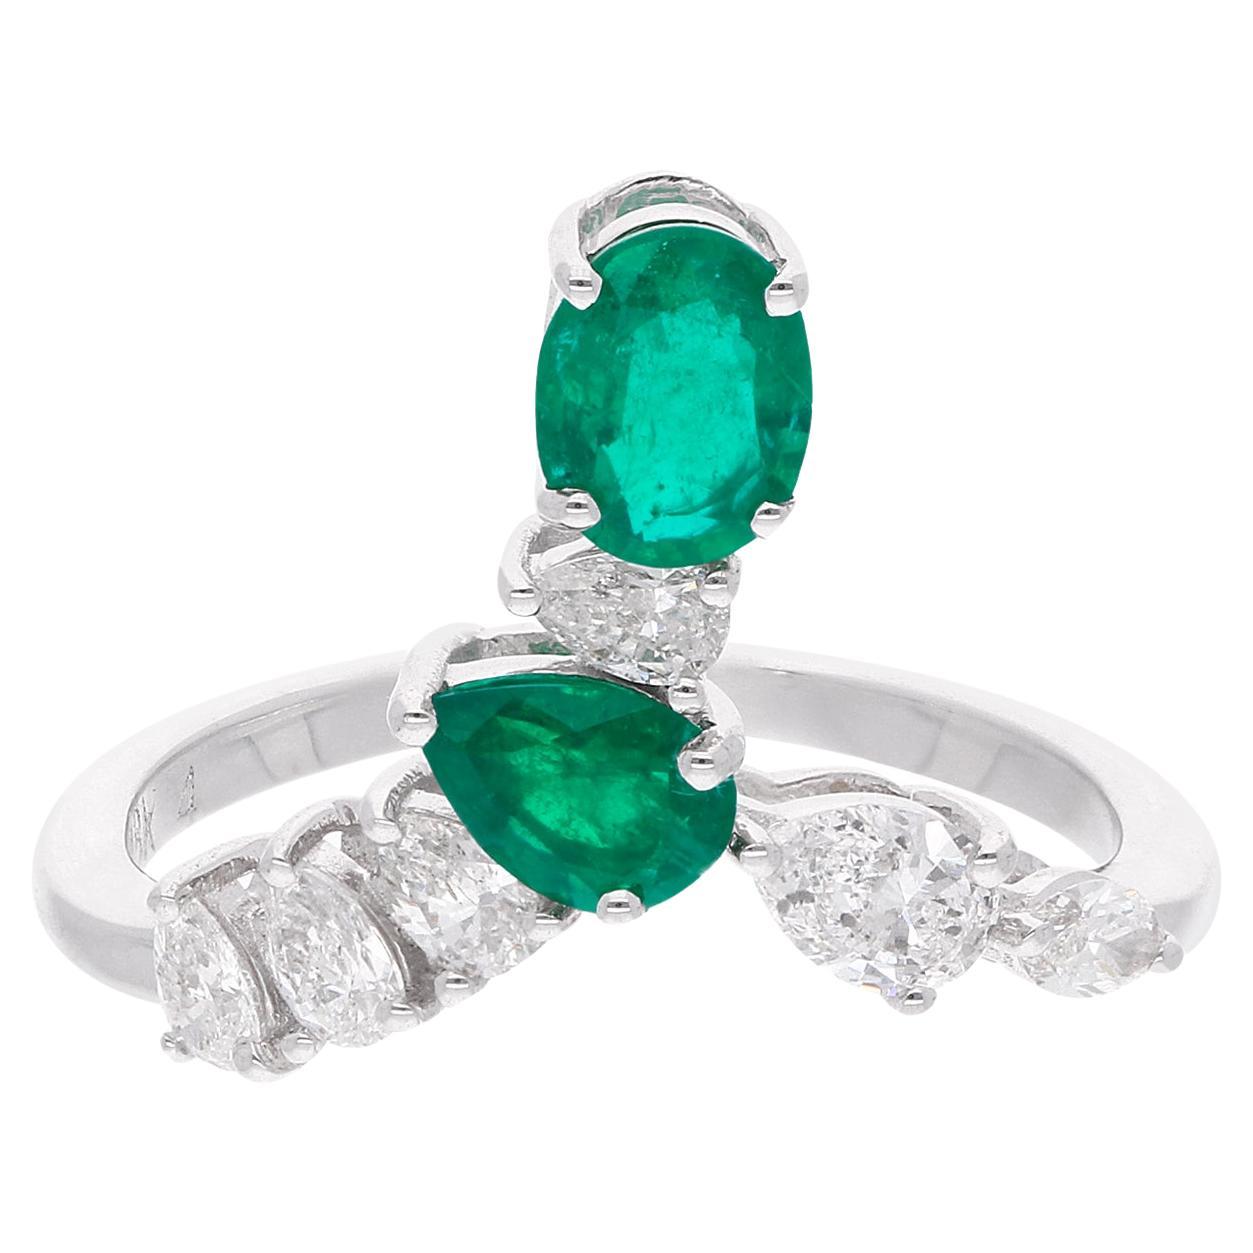 Oval Pear Natural Emerald Gemstone Ring Diamond 14 Karat White Gold Fine Jewelry